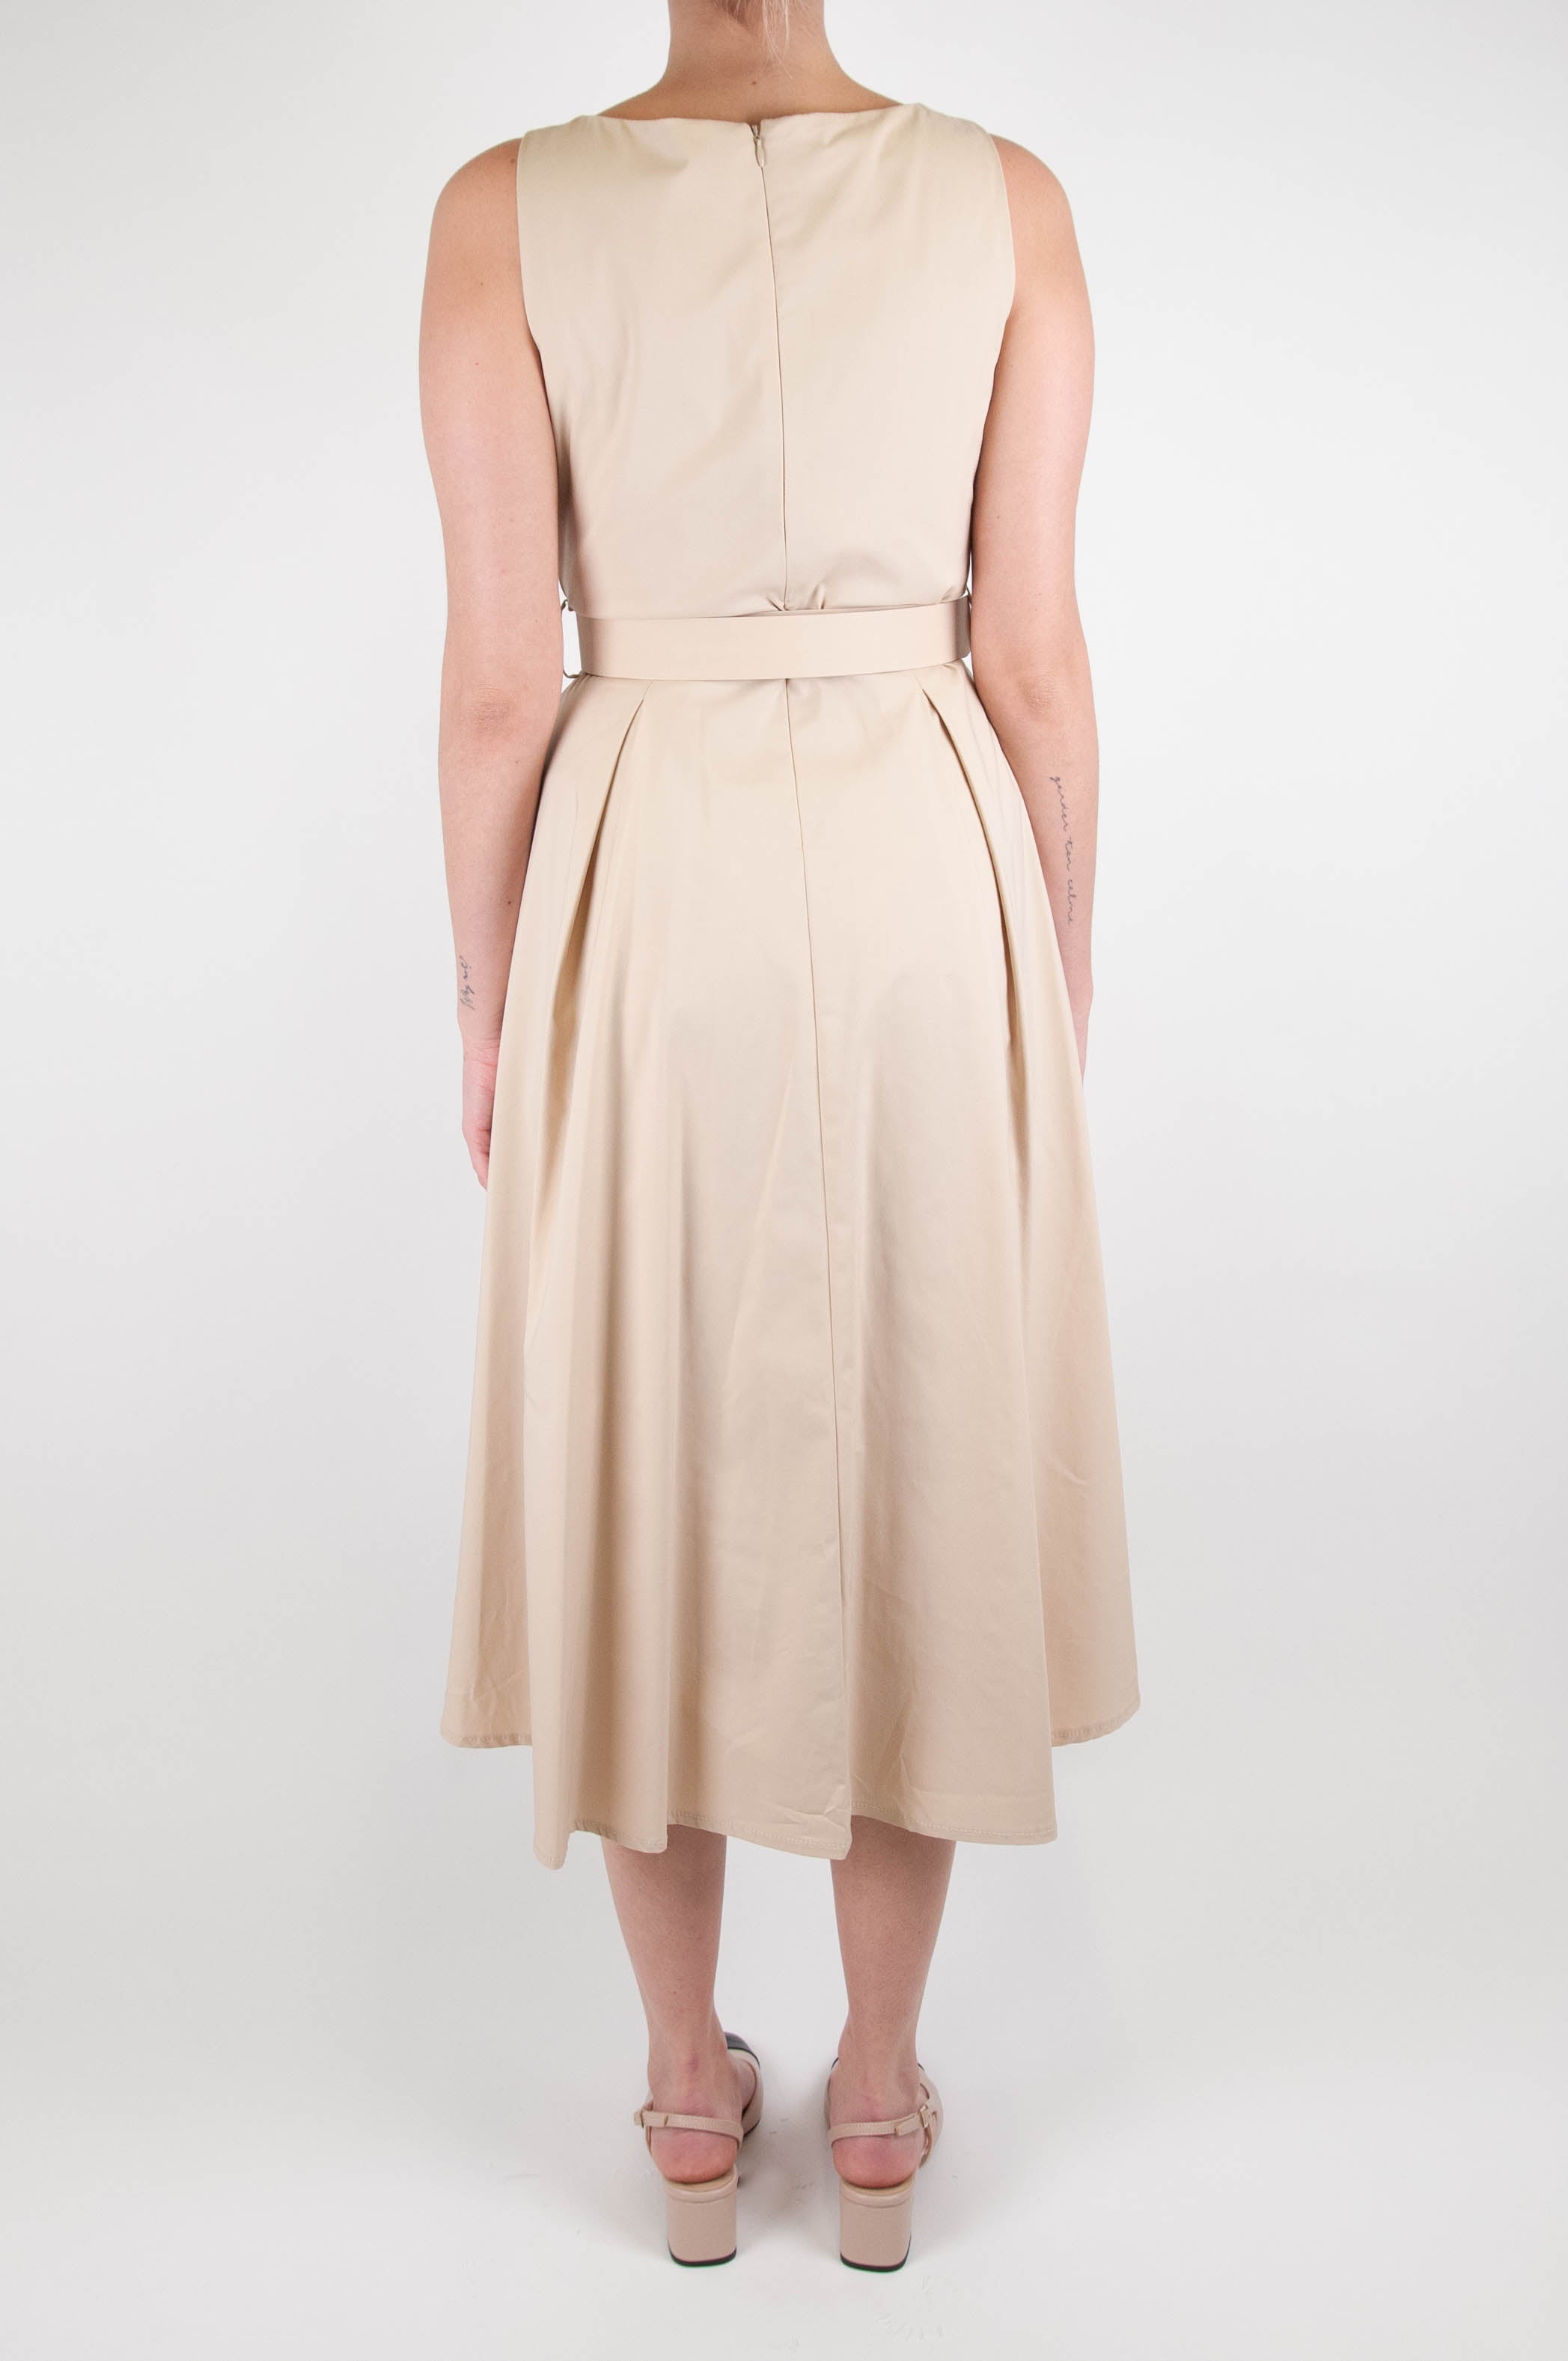 Maryley - Long sleeveless dress with flower brooch